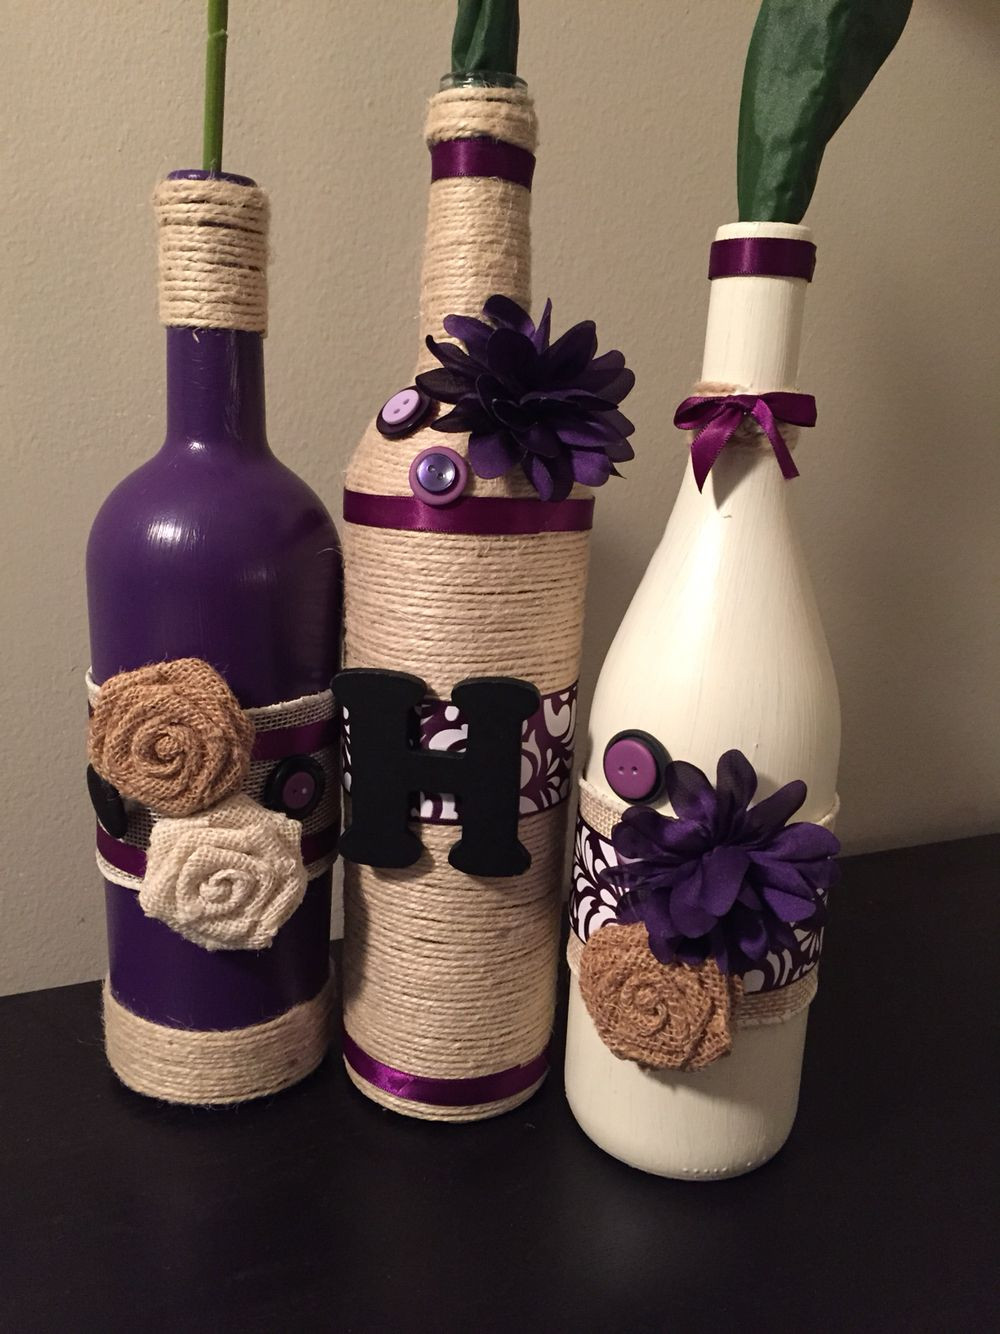 DIY Wine Bottle Decorations
 DIY wine bottle crafts Pinterest Successes